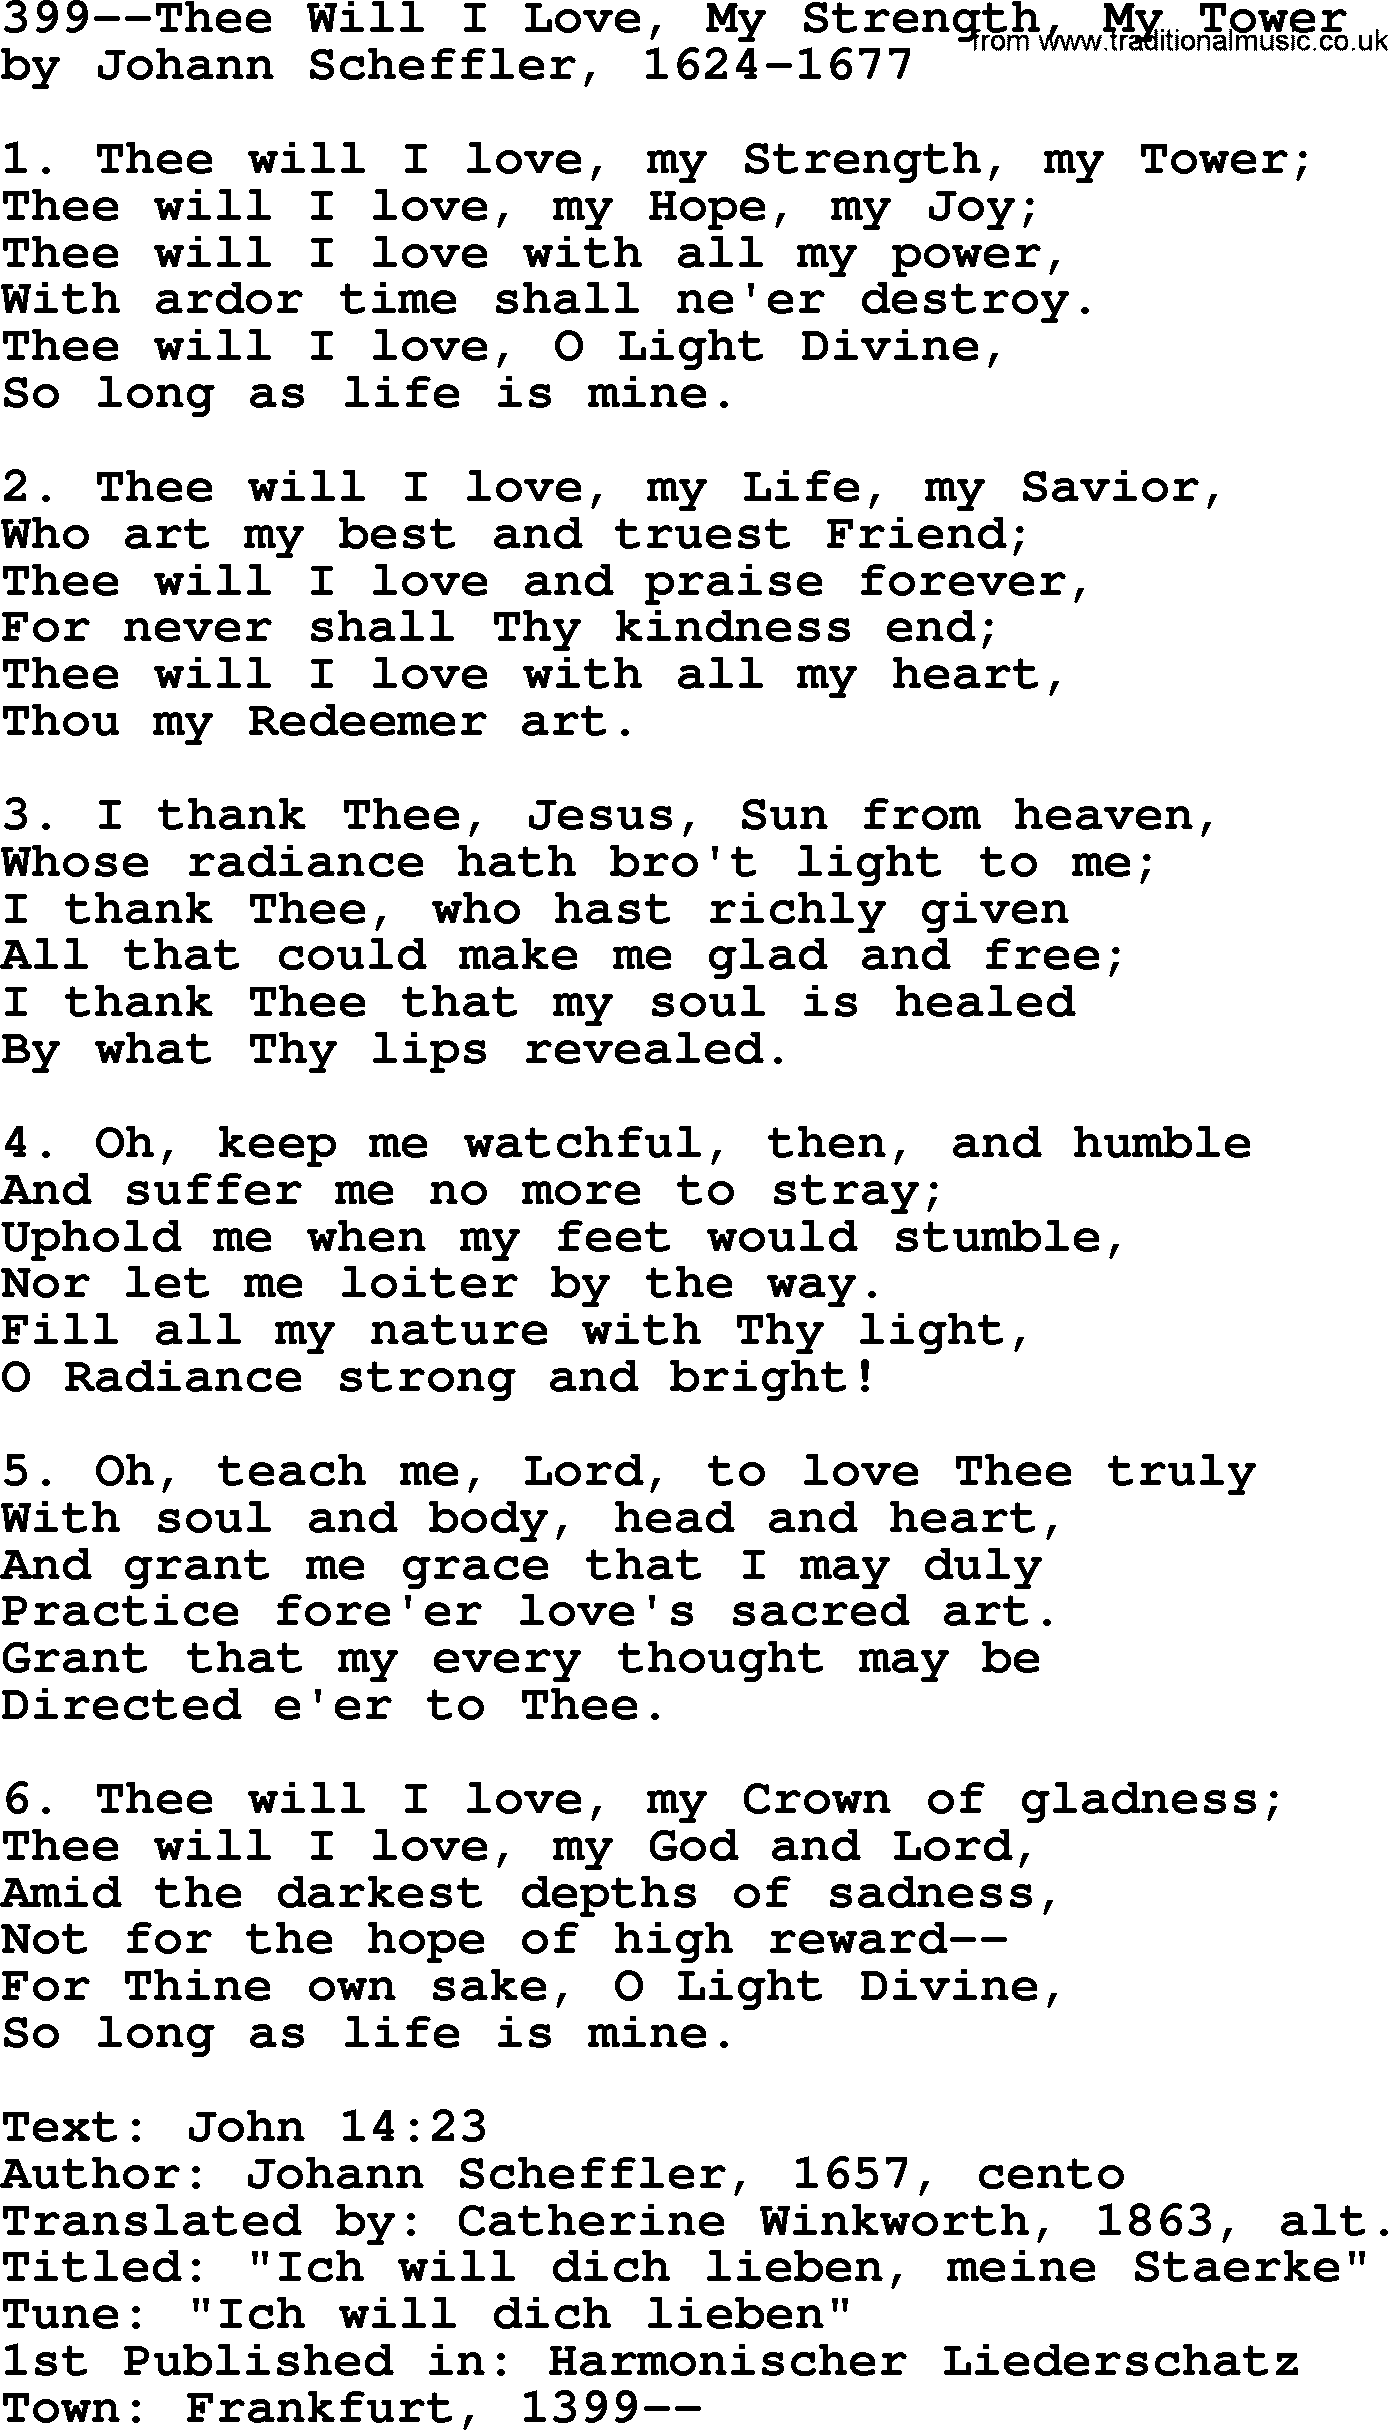 Lutheran Hymn: 399--Thee Will I Love, My Strength, My Tower.txt lyrics with PDF